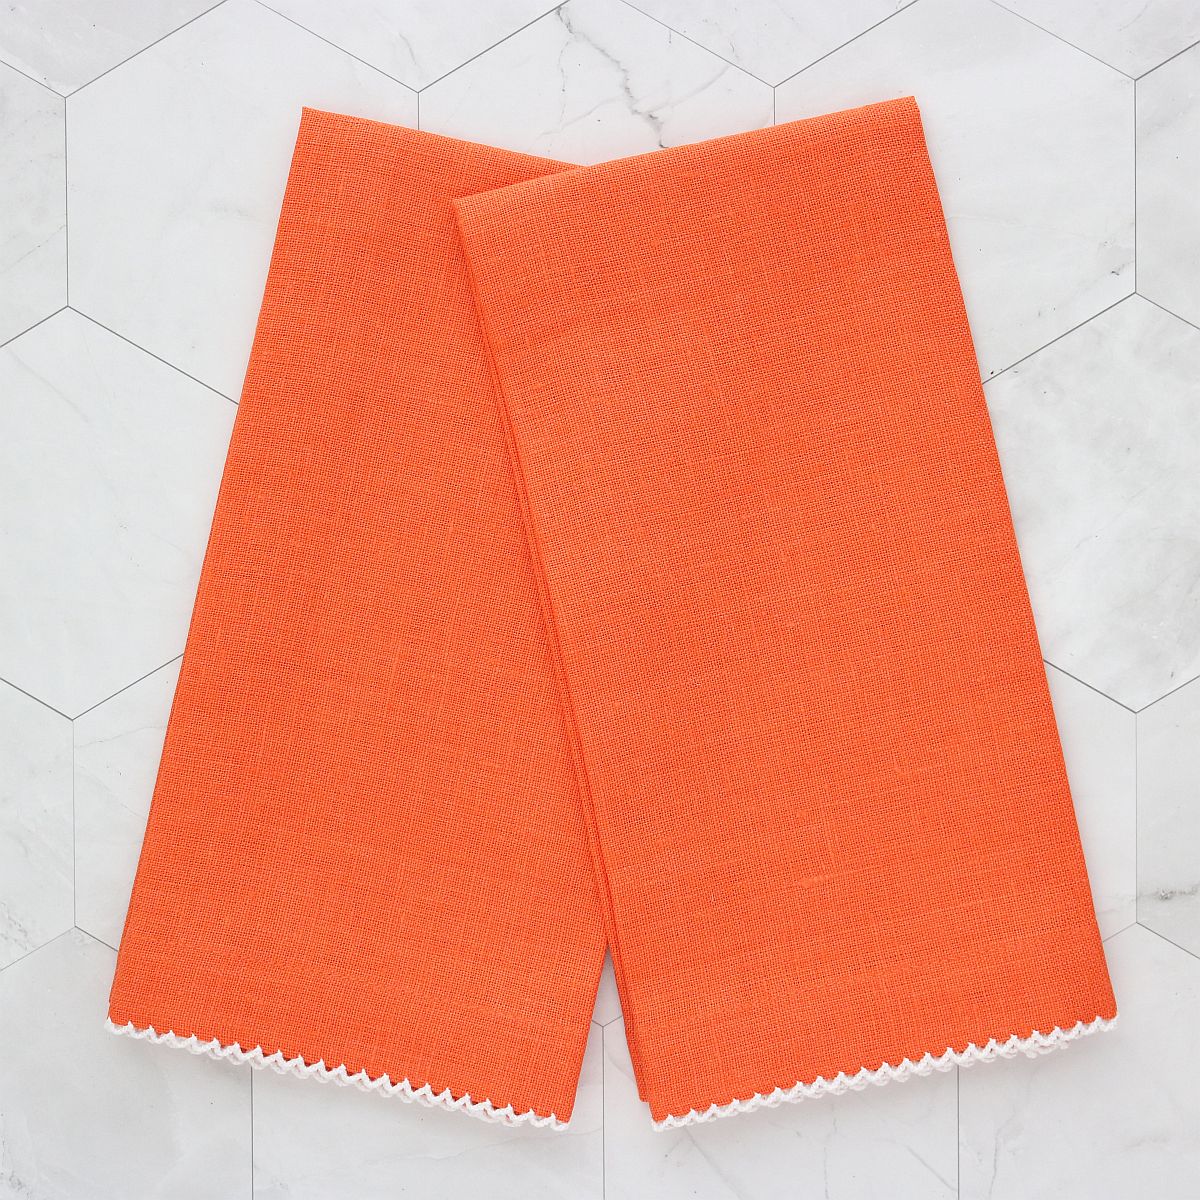 Orange linen guest towel with White edge picot trim